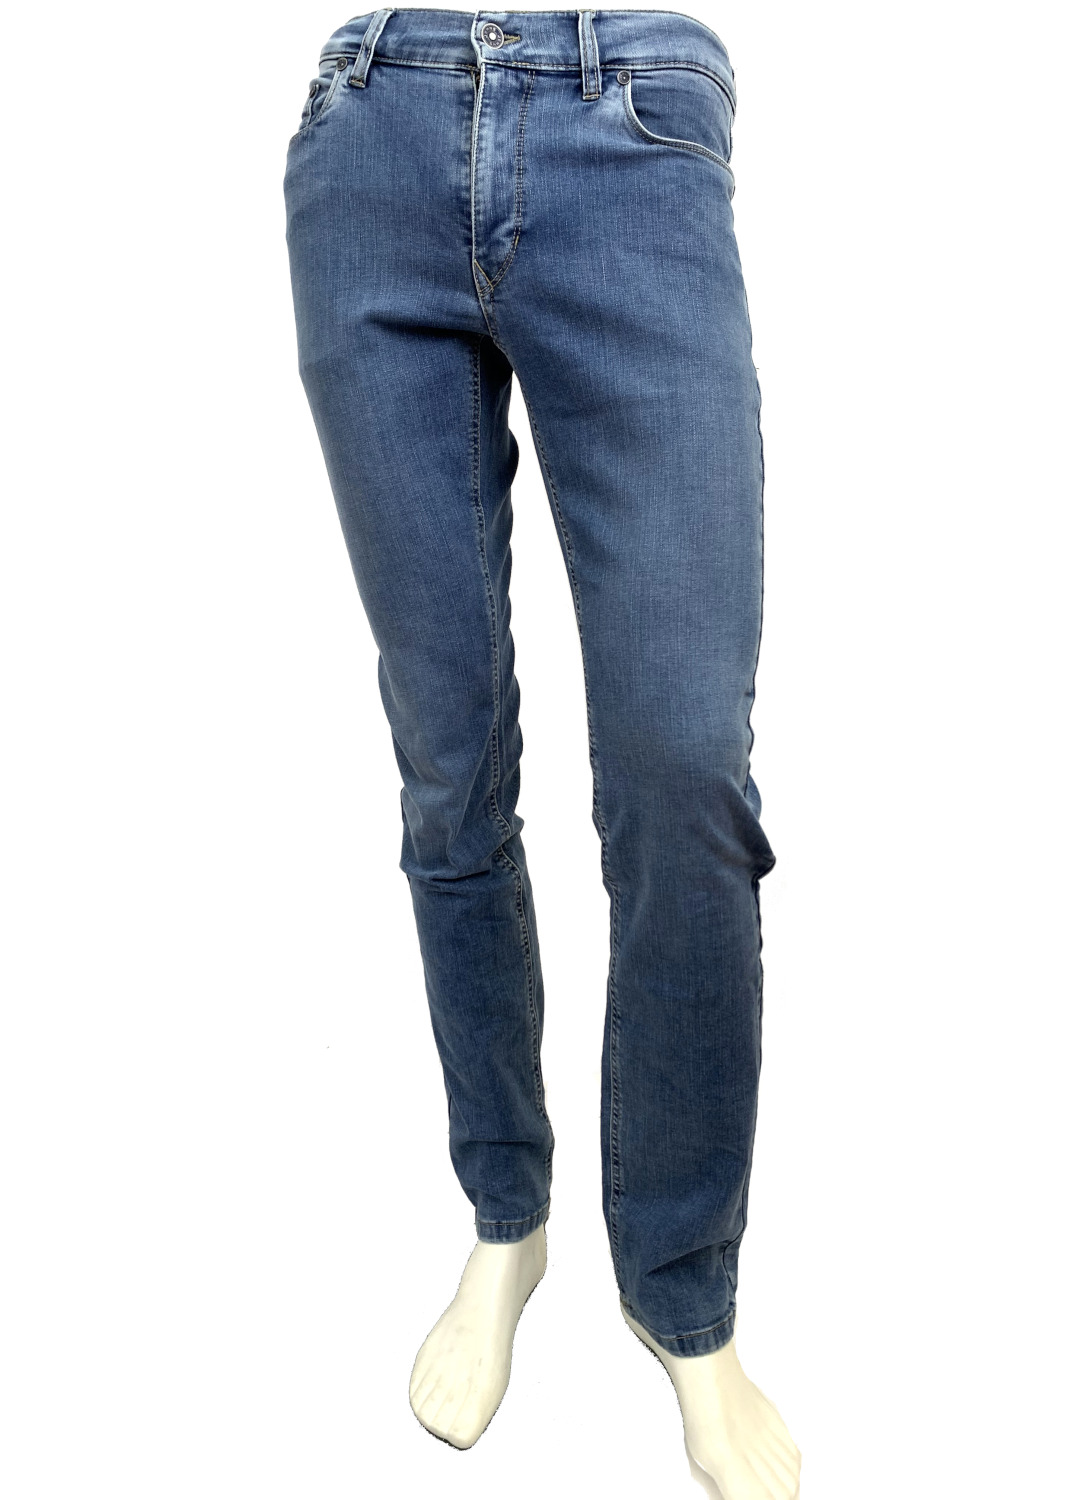 Jeans 5 tasche Bleach da uomo in cotone biologico